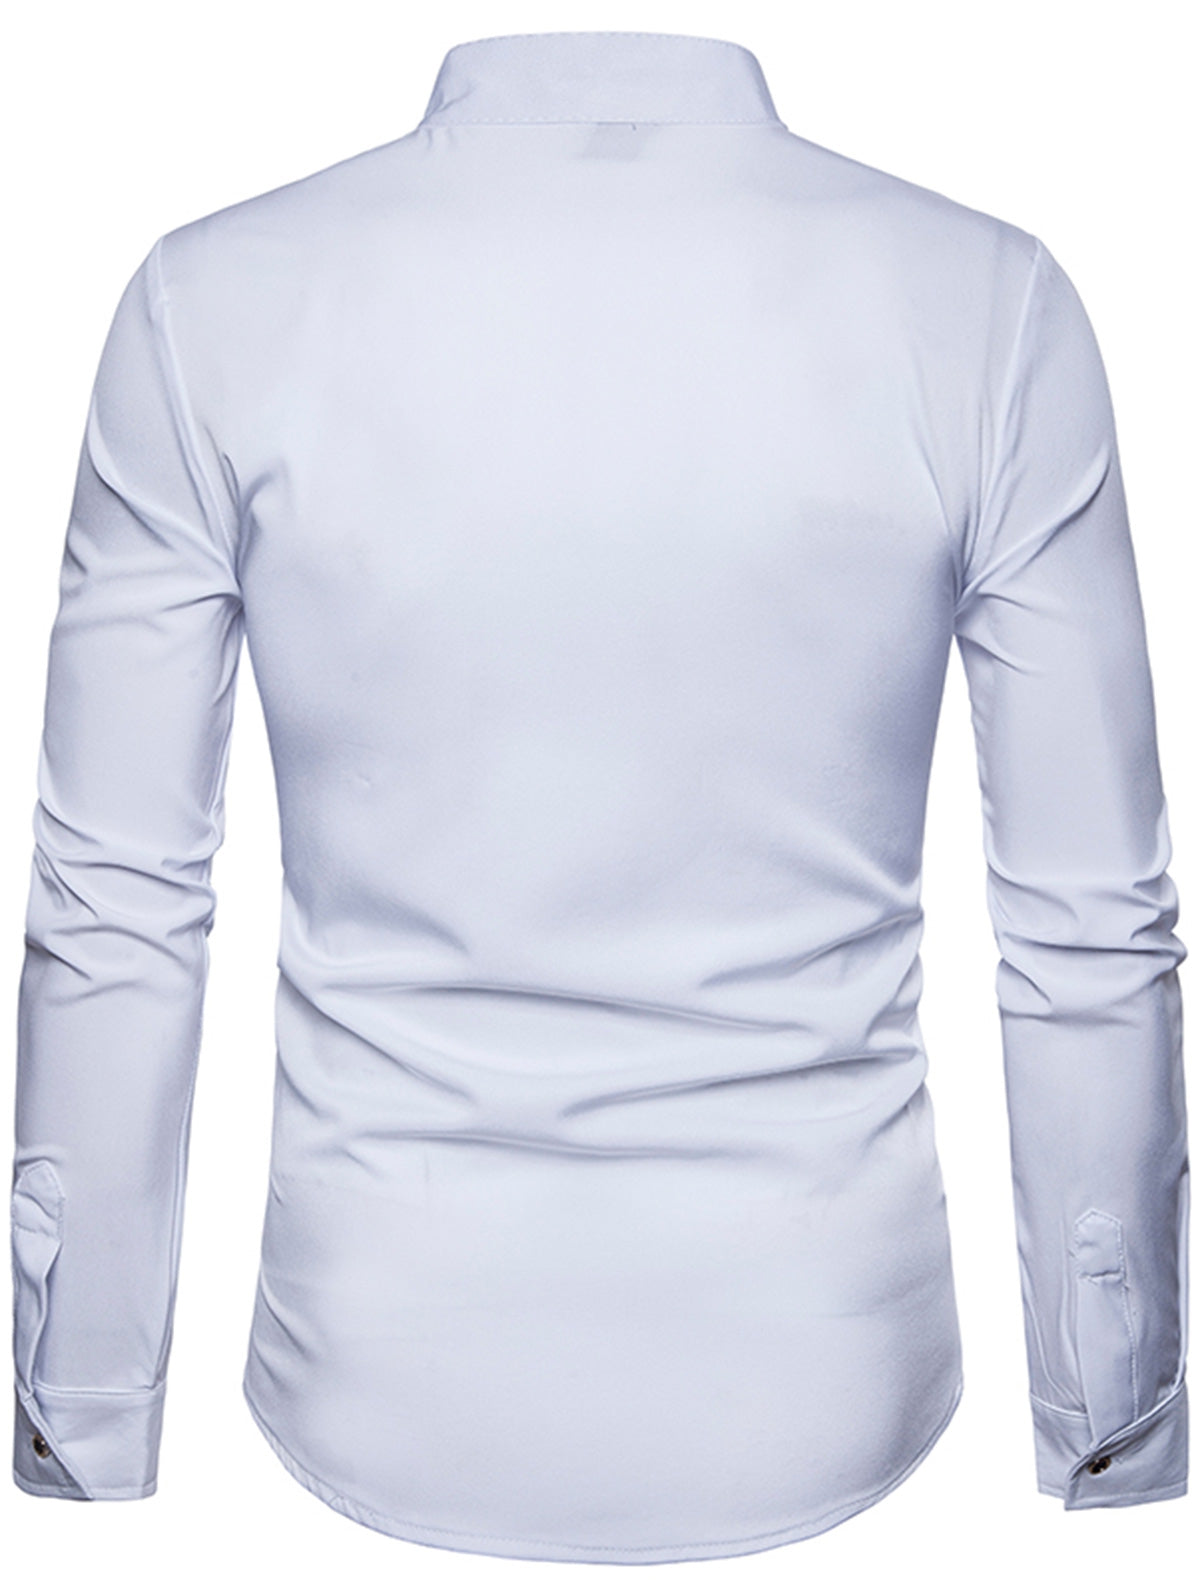 Men's Turndown Collar Embroidered Design Slim Fit Shirt